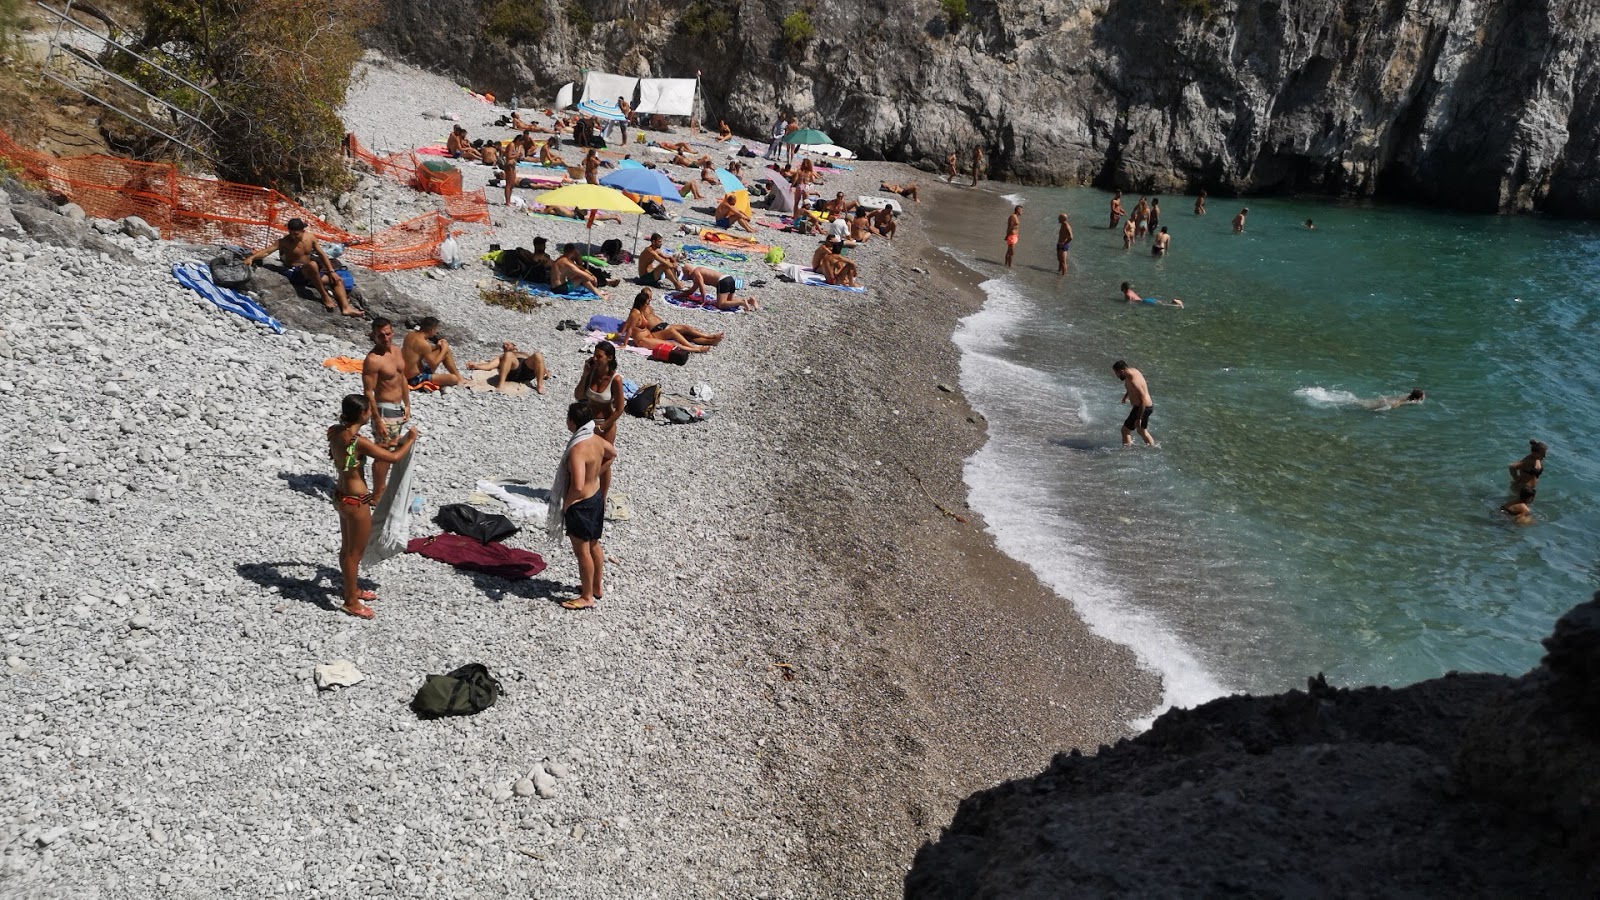 Spiaggia di Sovrano'in fotoğrafı kısmen temiz temizlik seviyesi ile